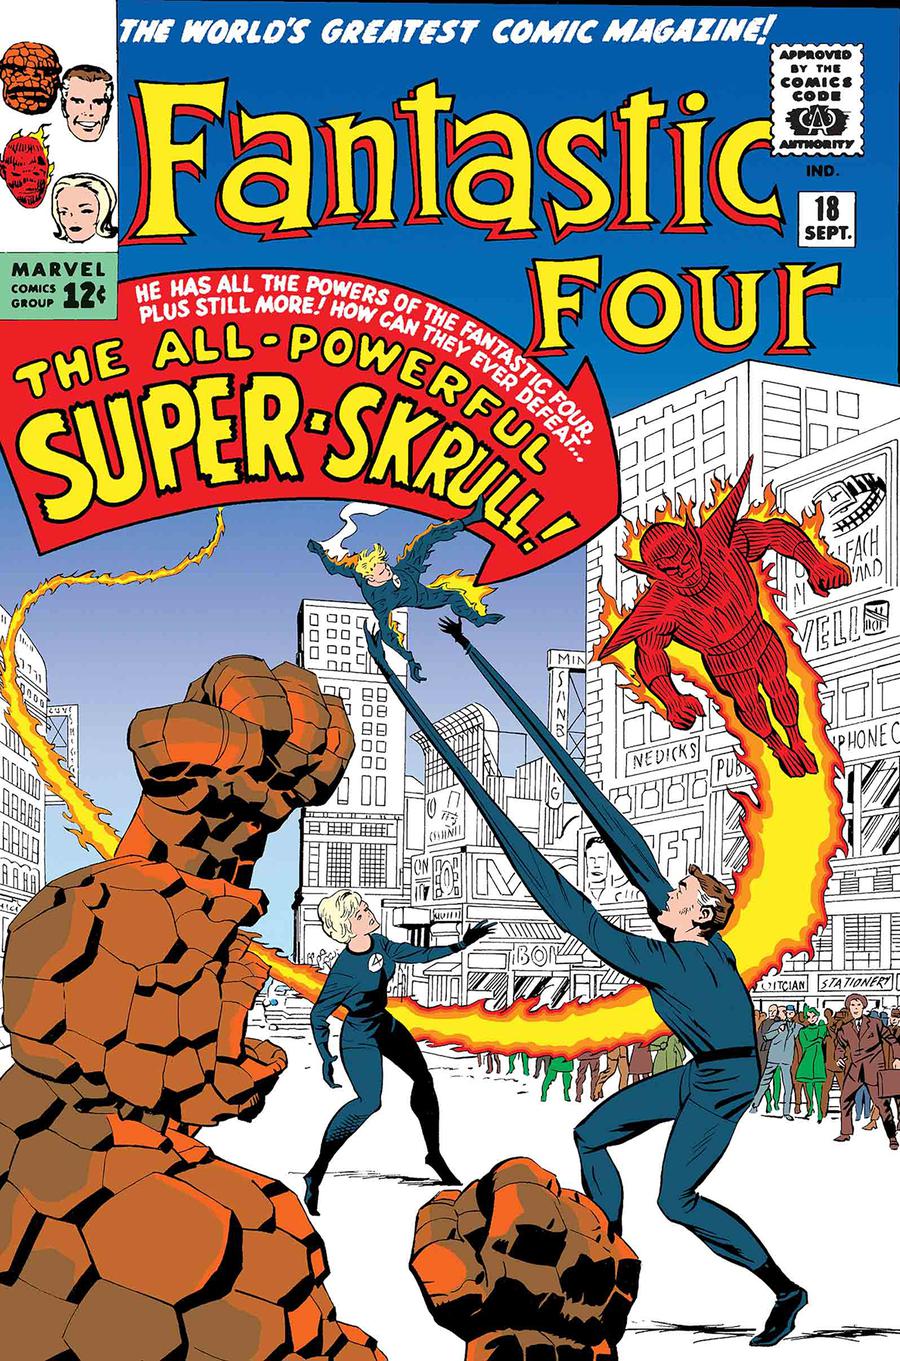 True Believers Fantastic Four Super-Skrull #1